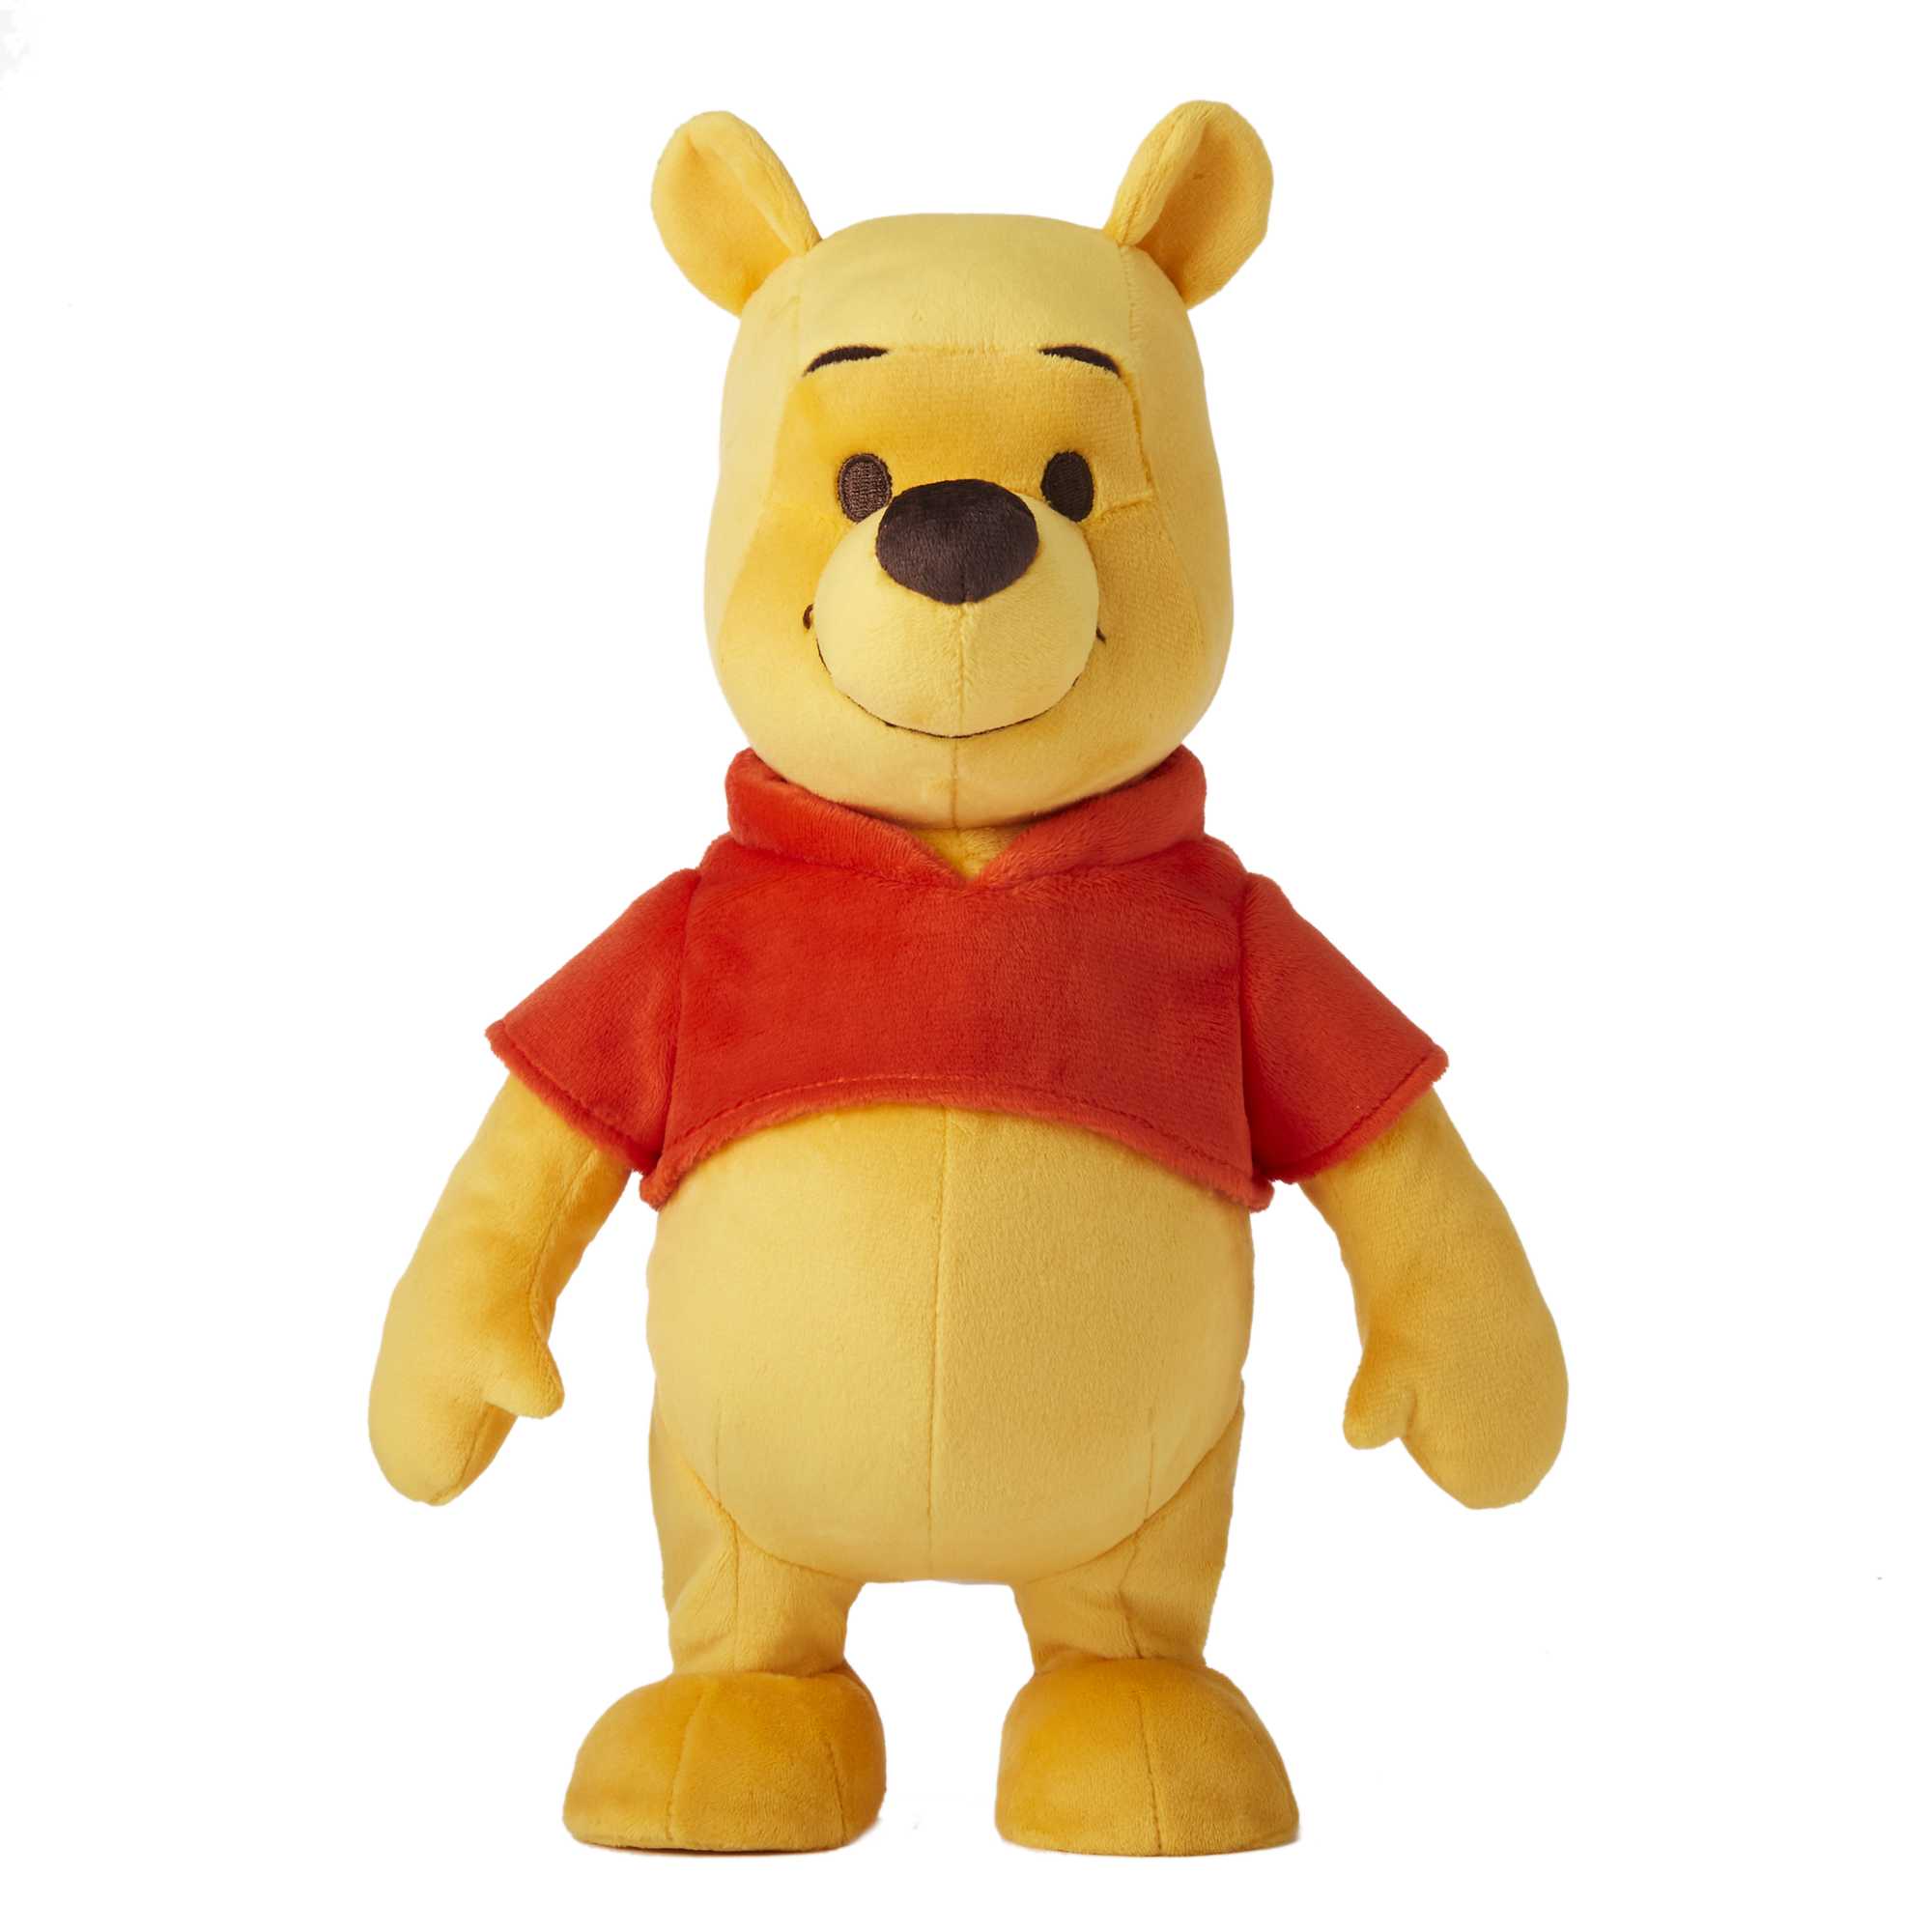 Tessa's Winnie the Pooh Themed Baby Shower